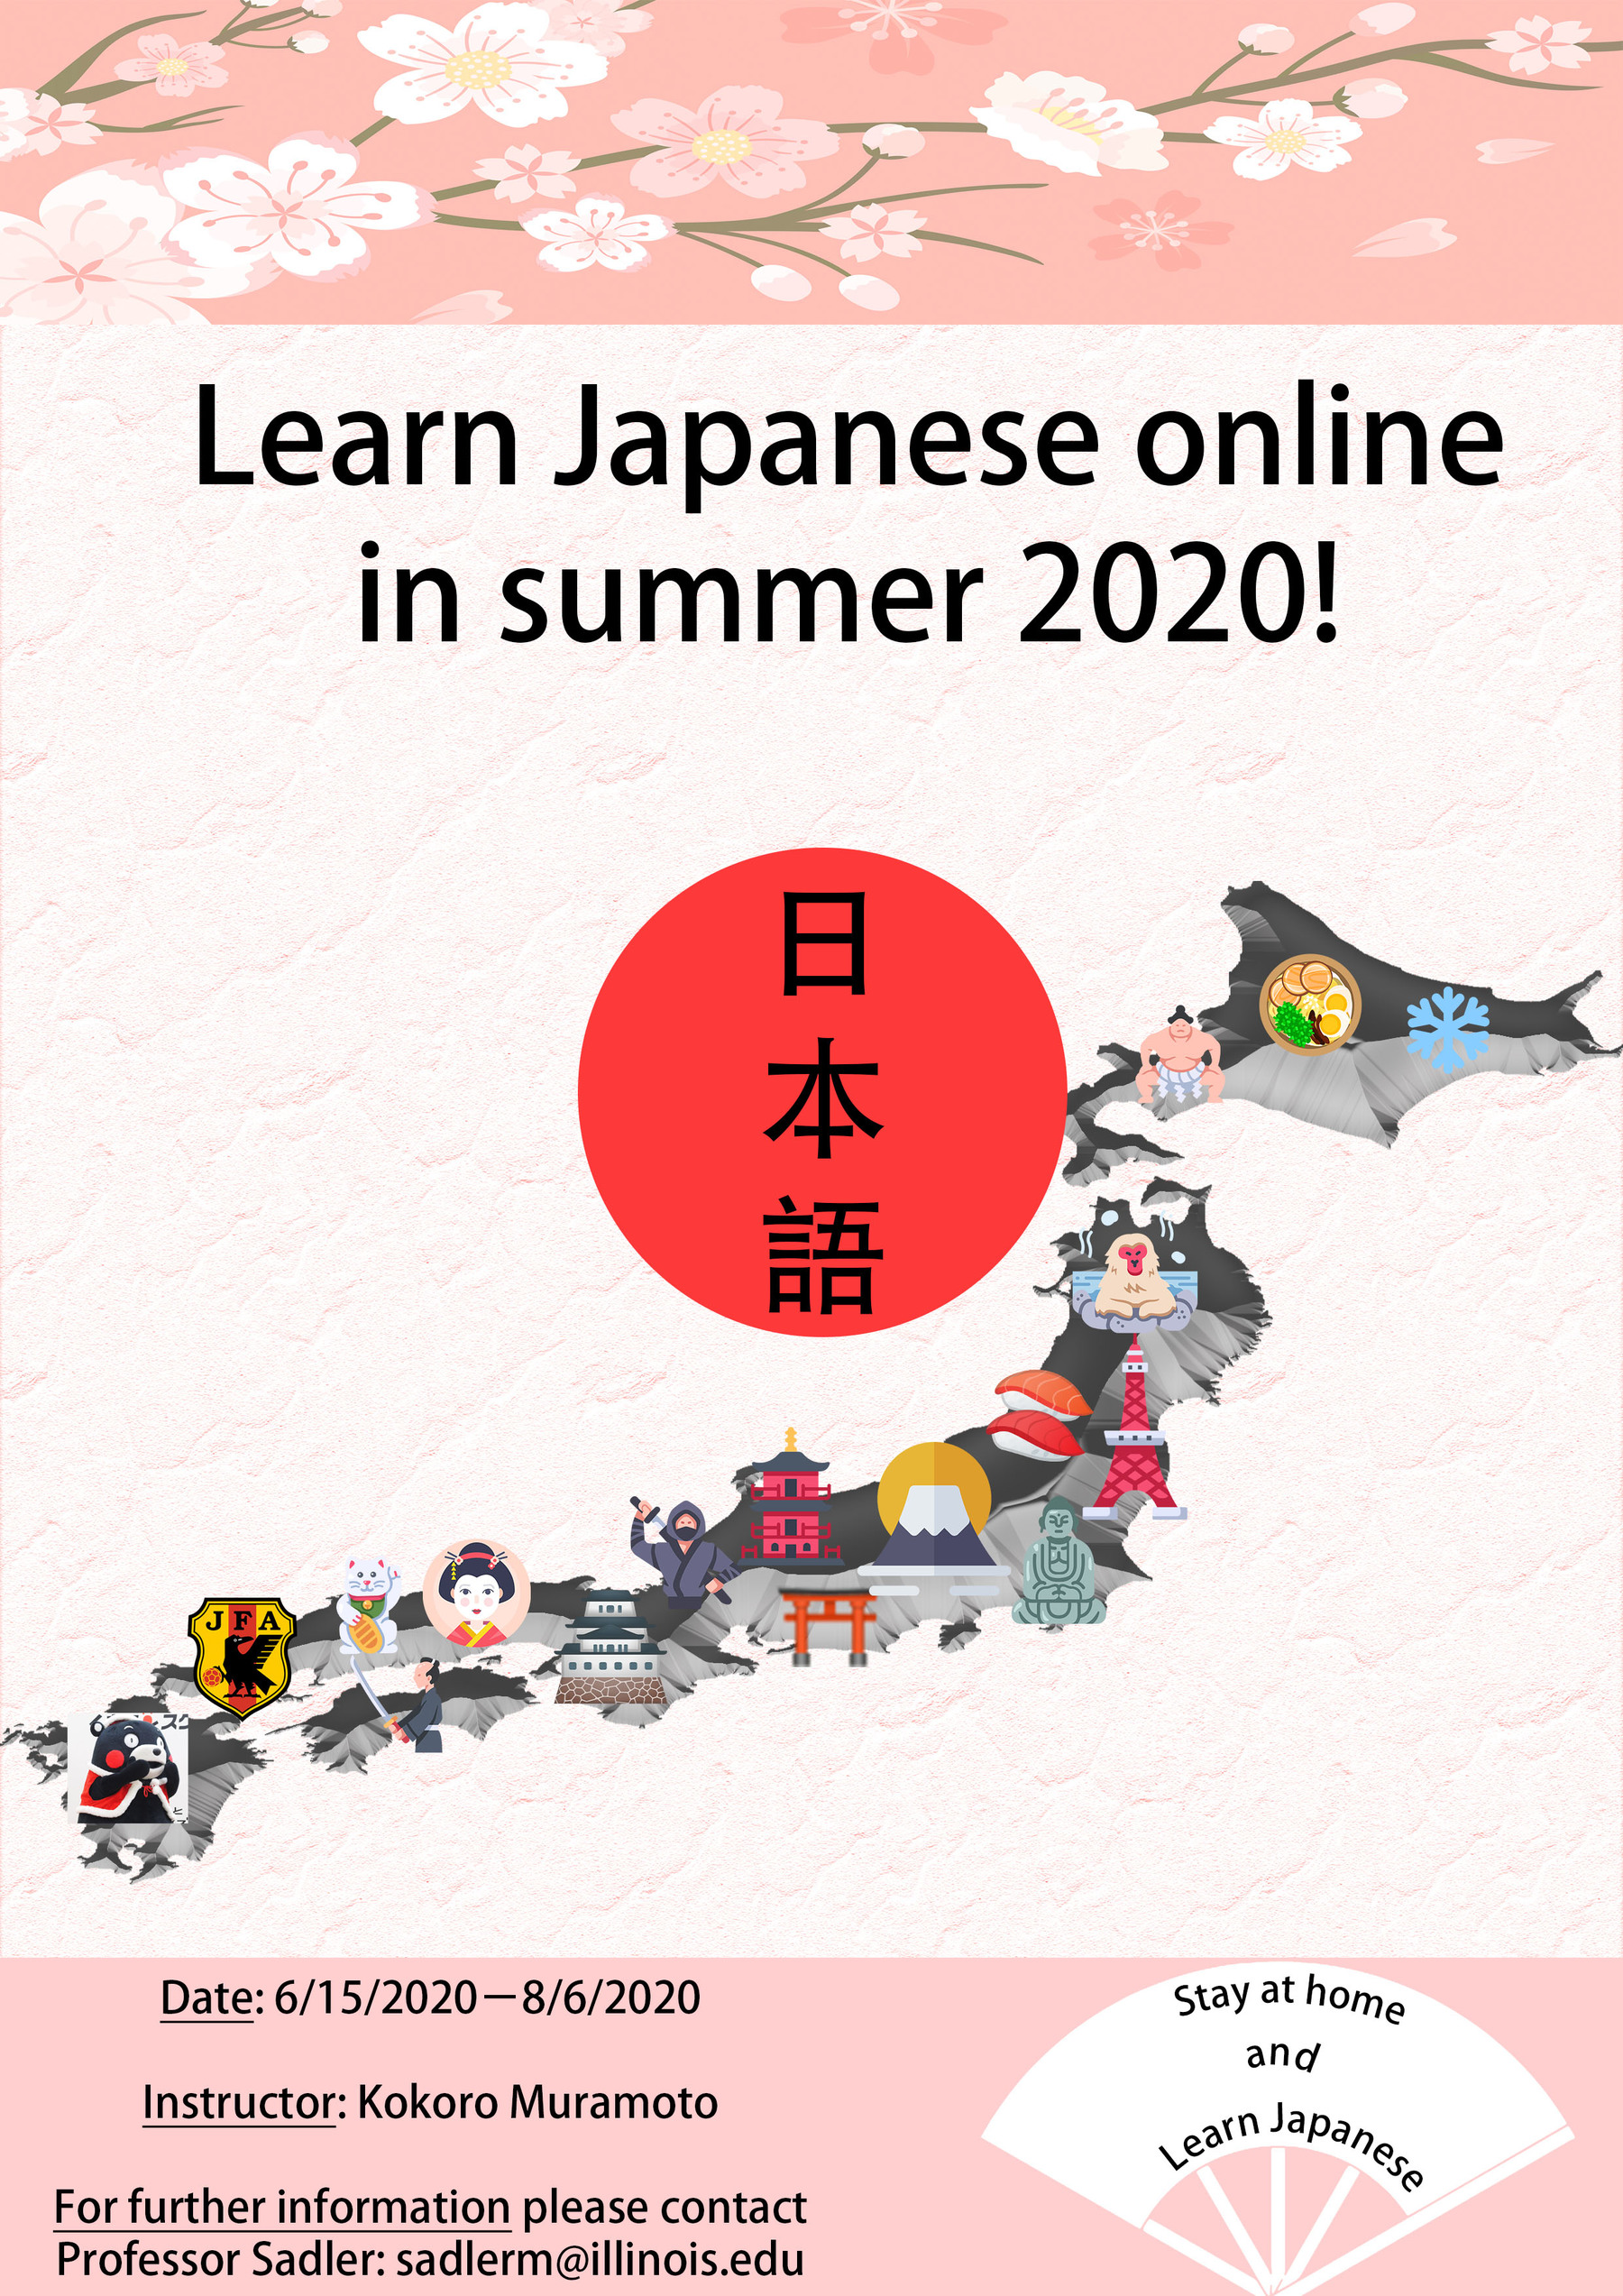 Learning Japanese Online in Summer 2020 Flyer